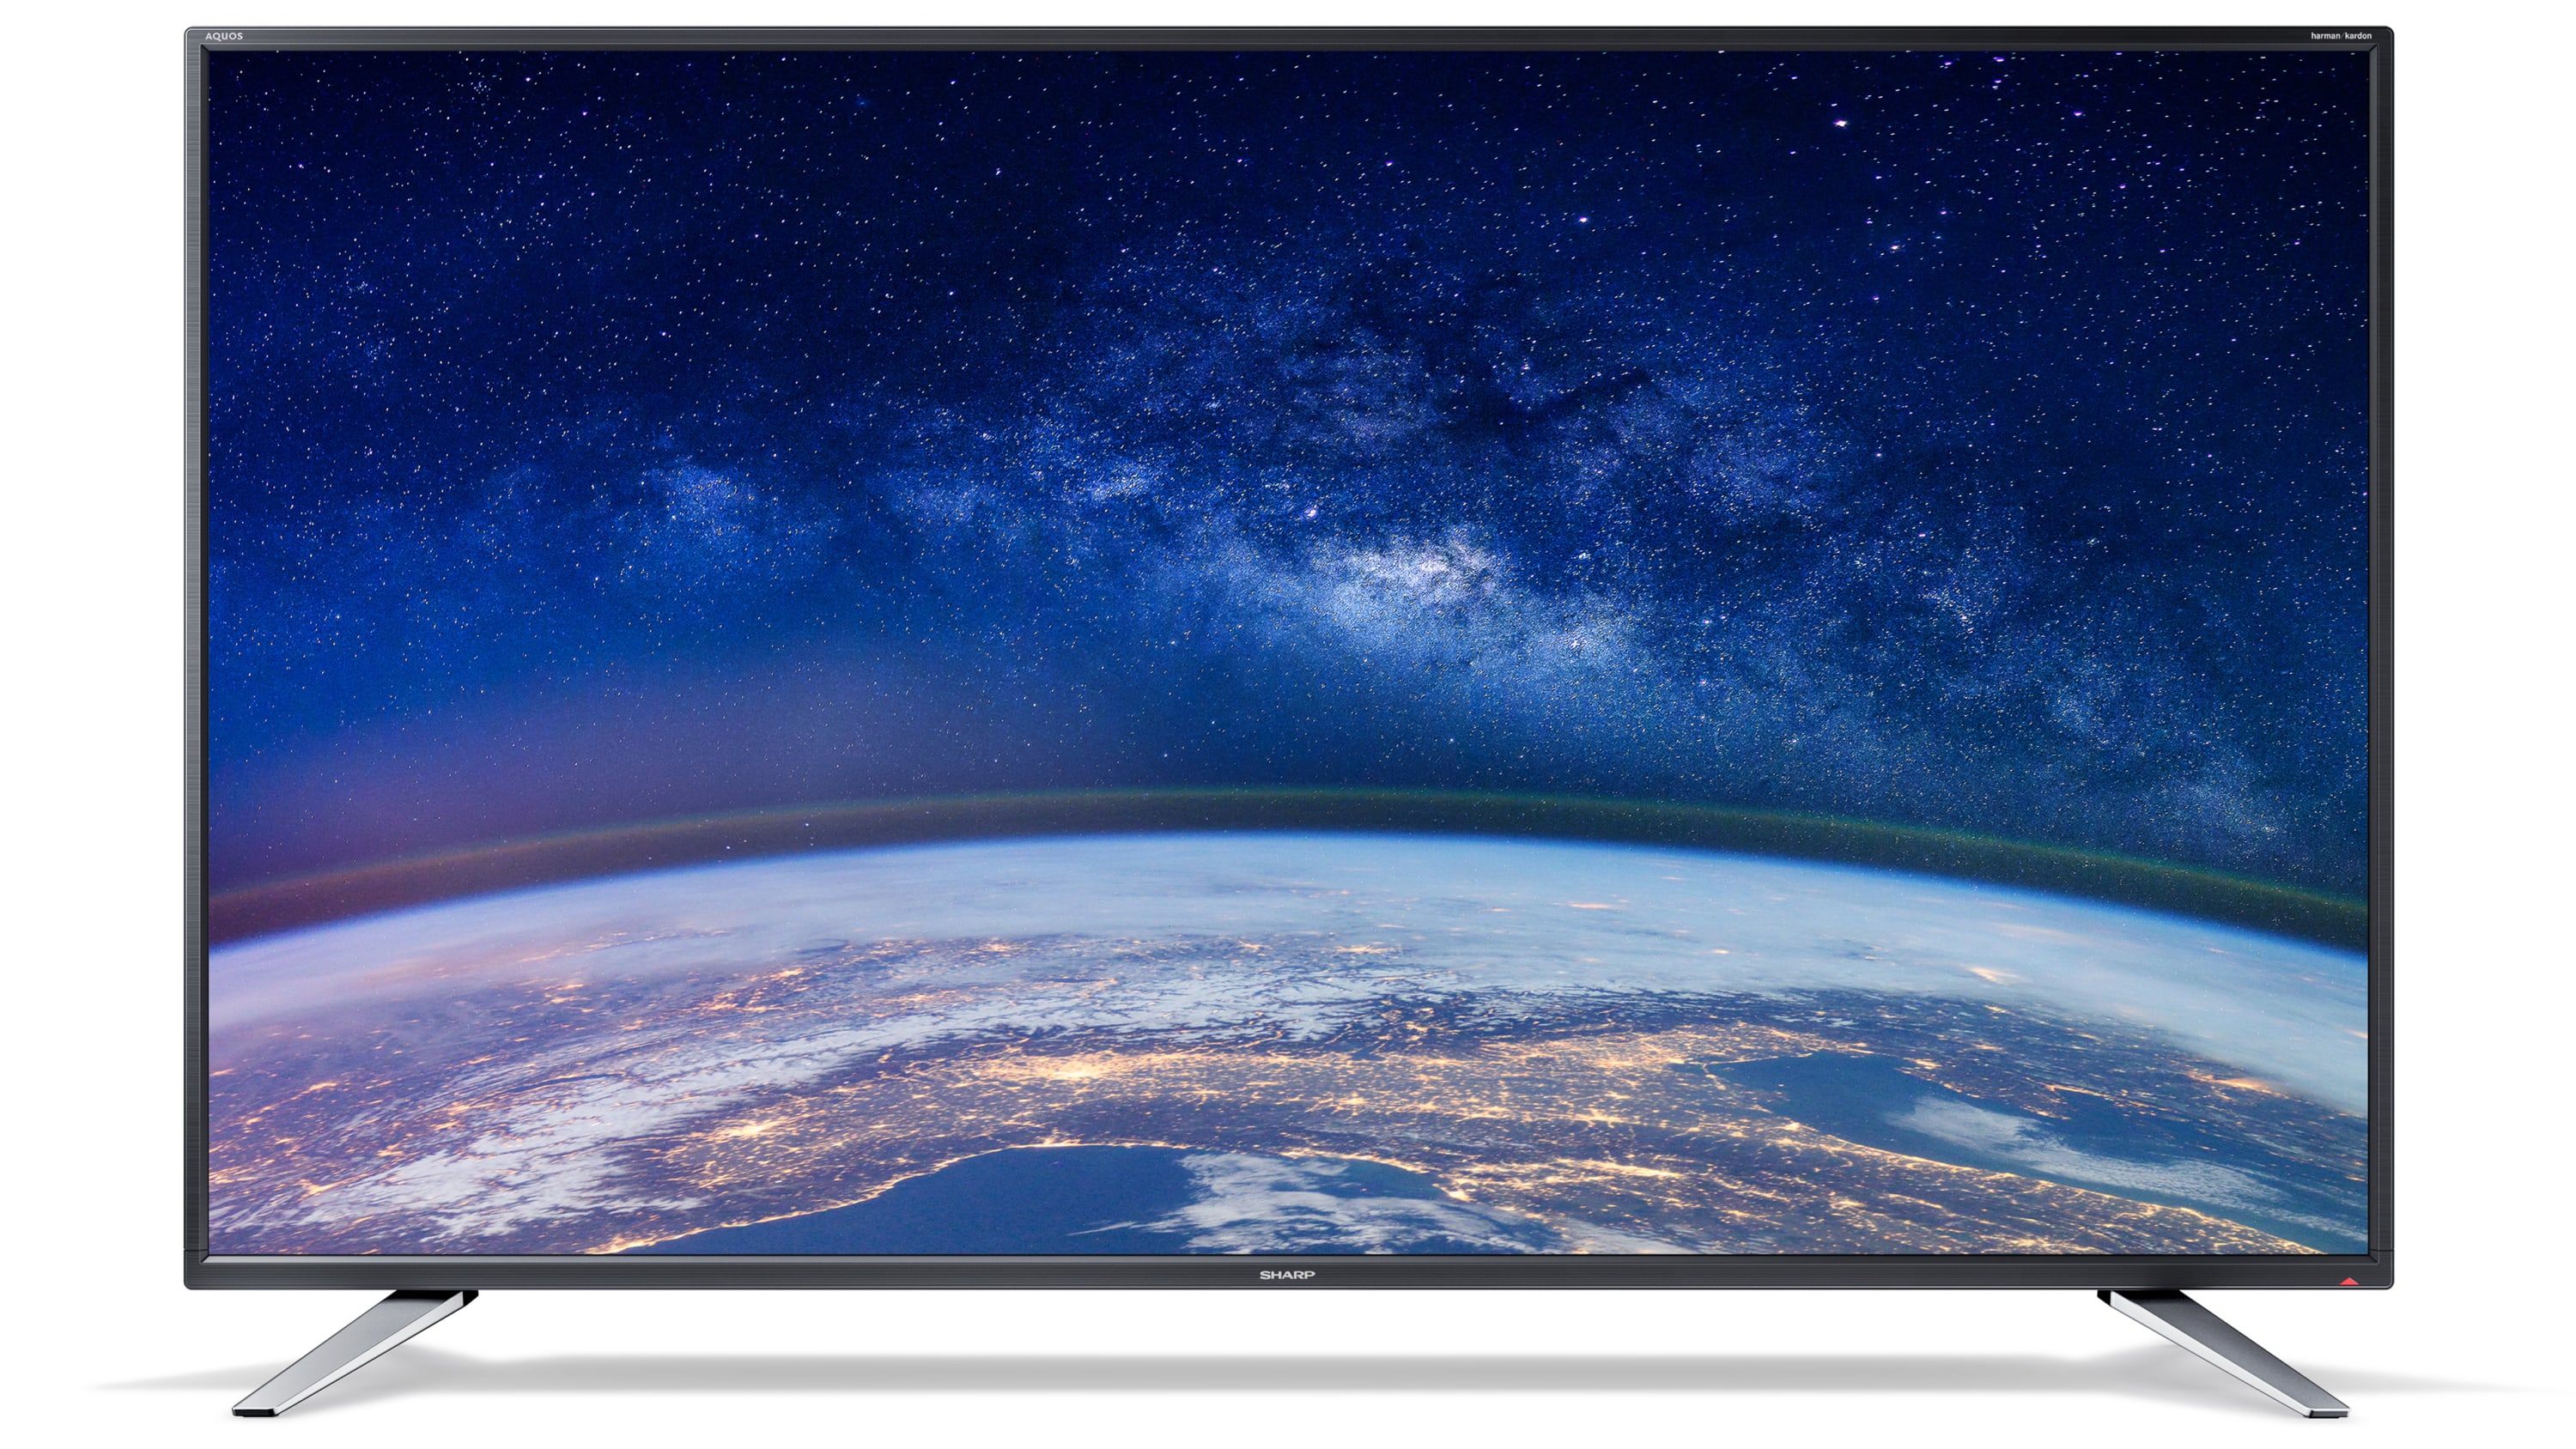 Smart TV HD/Full HD - 50" FULL HD SMART